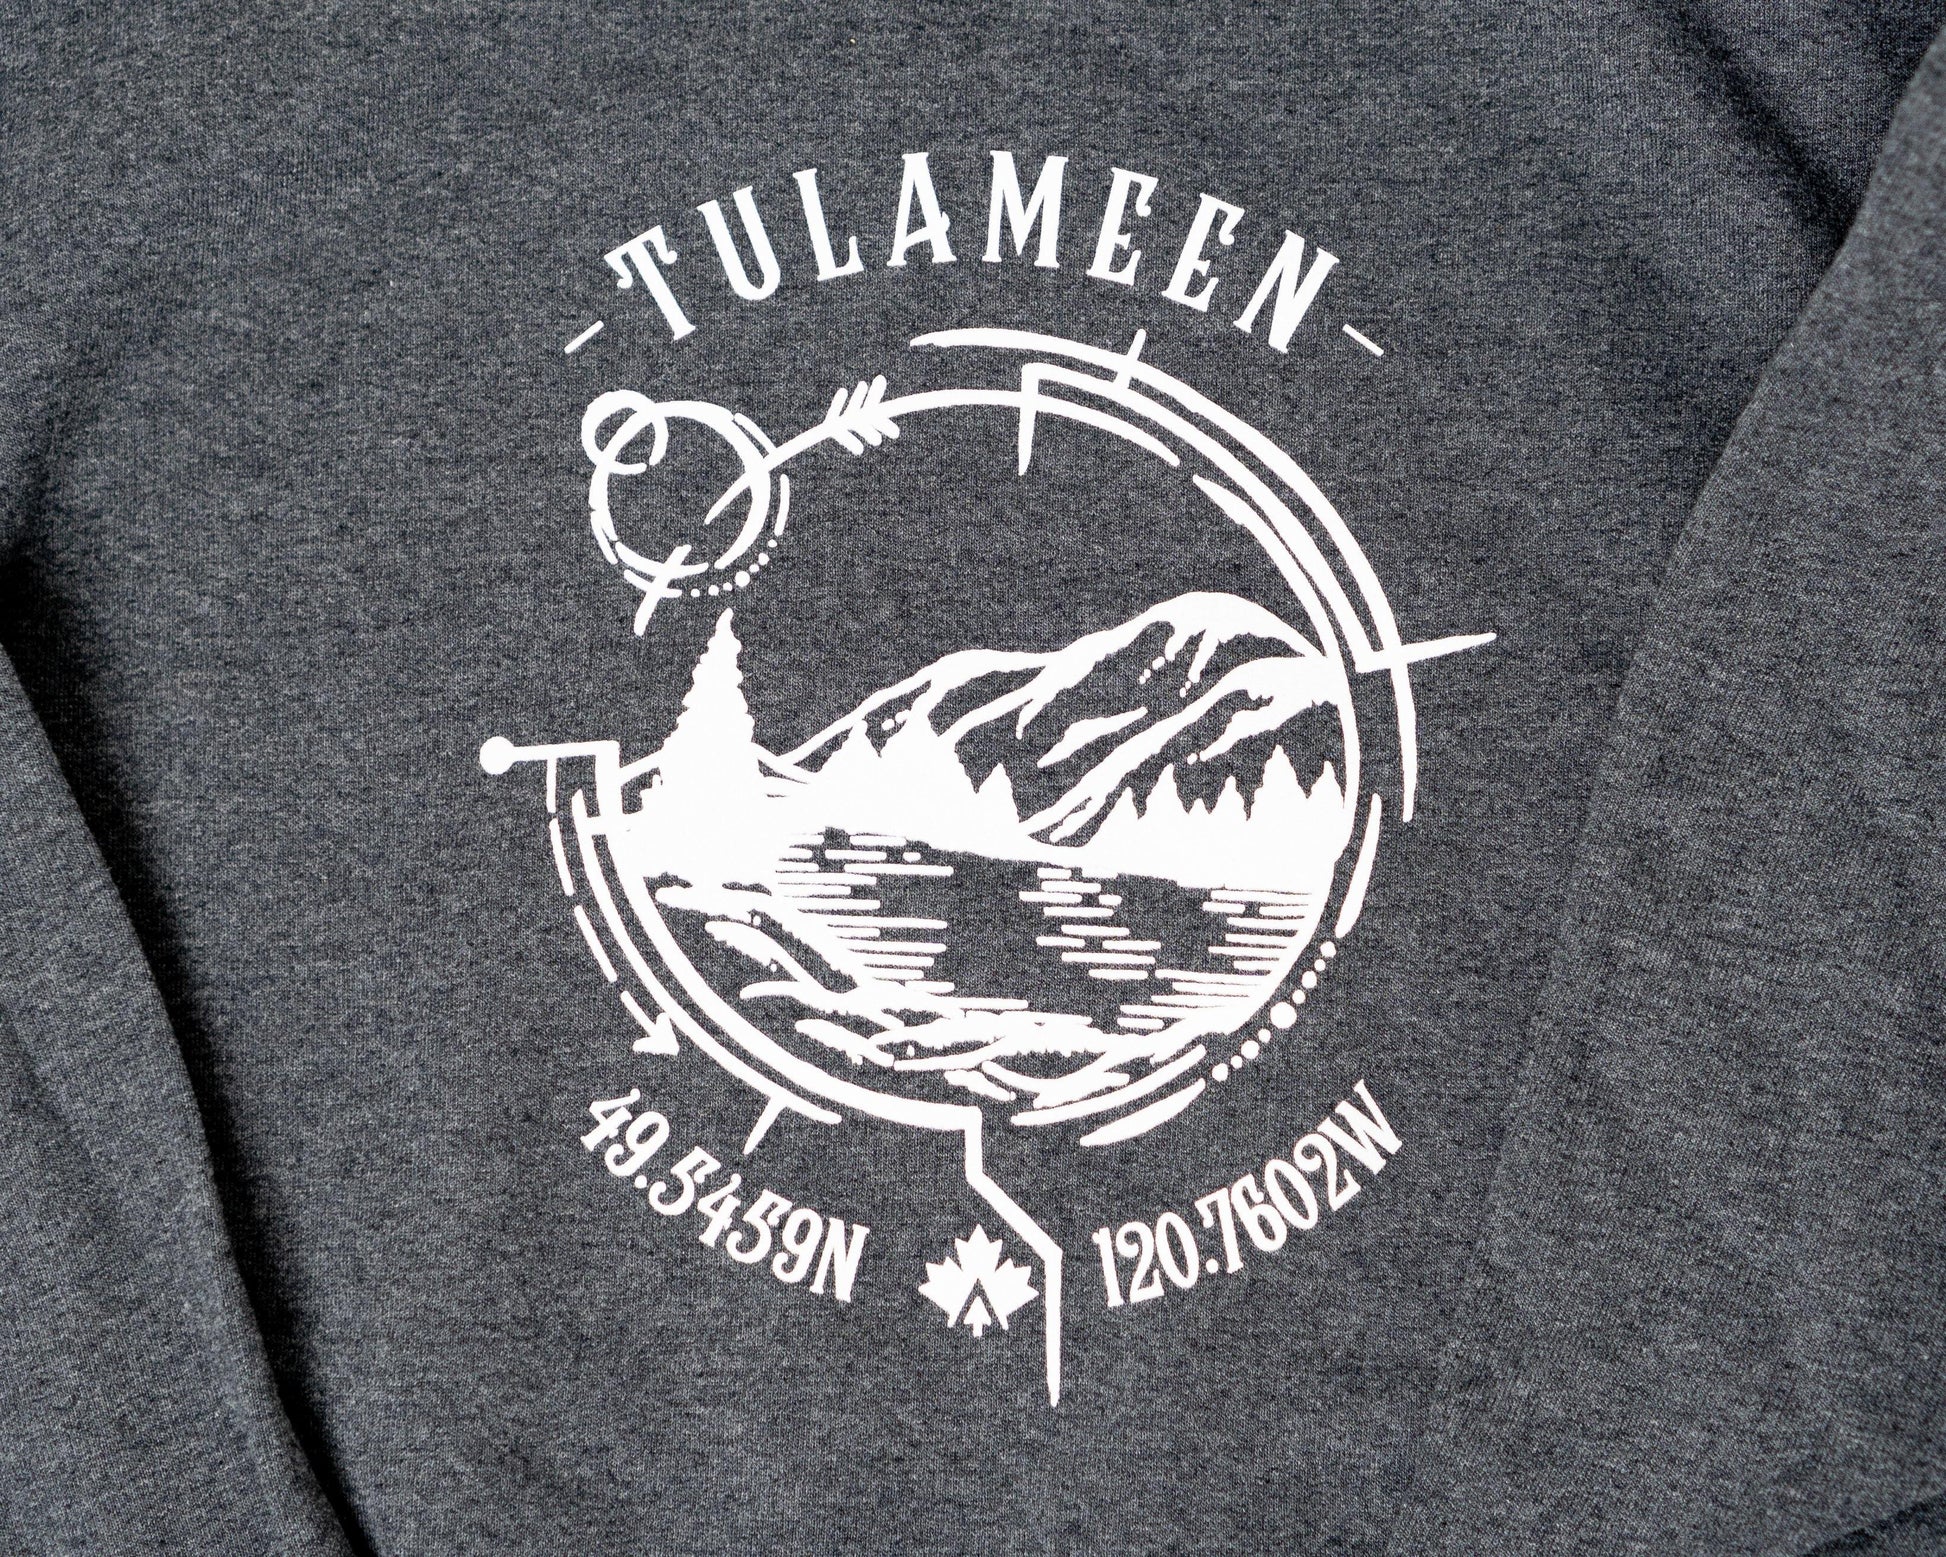 NEW!!! Tulameen Crew - Latitude/Longitude Series - Lake Therapy apparel 